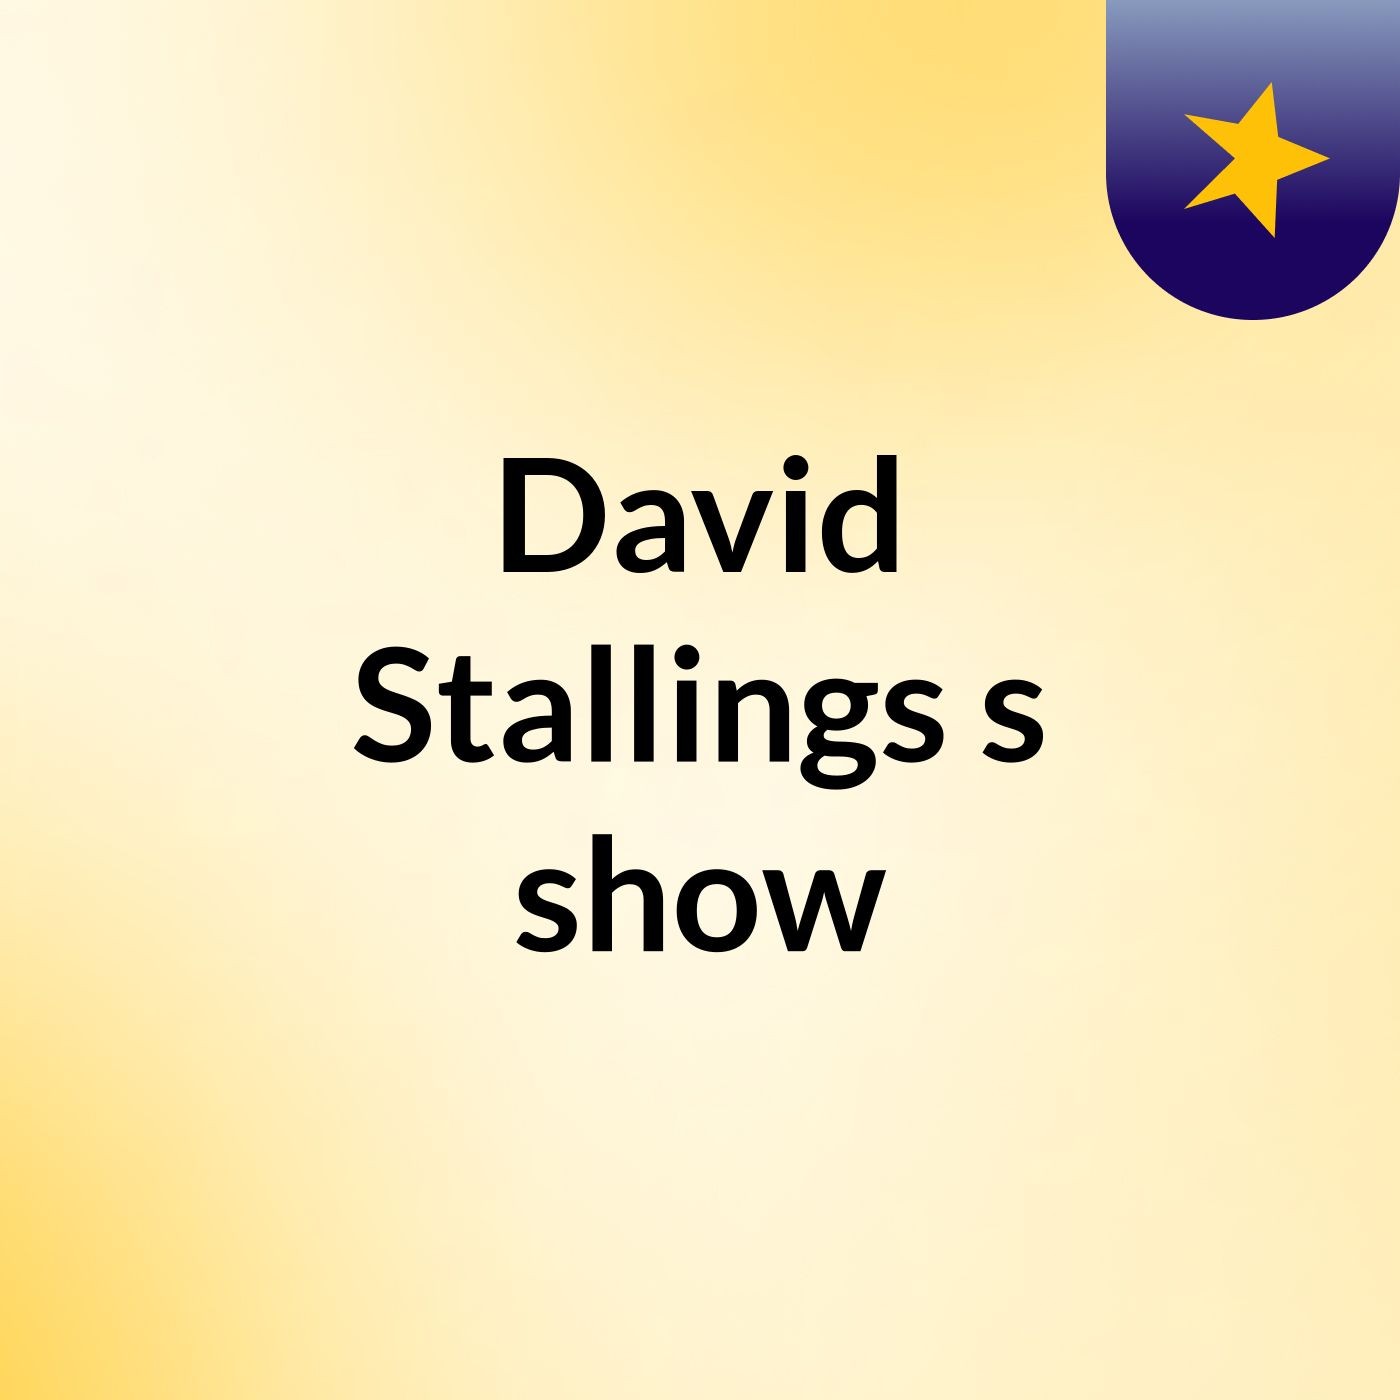 Episode 5 - David Stallings's show